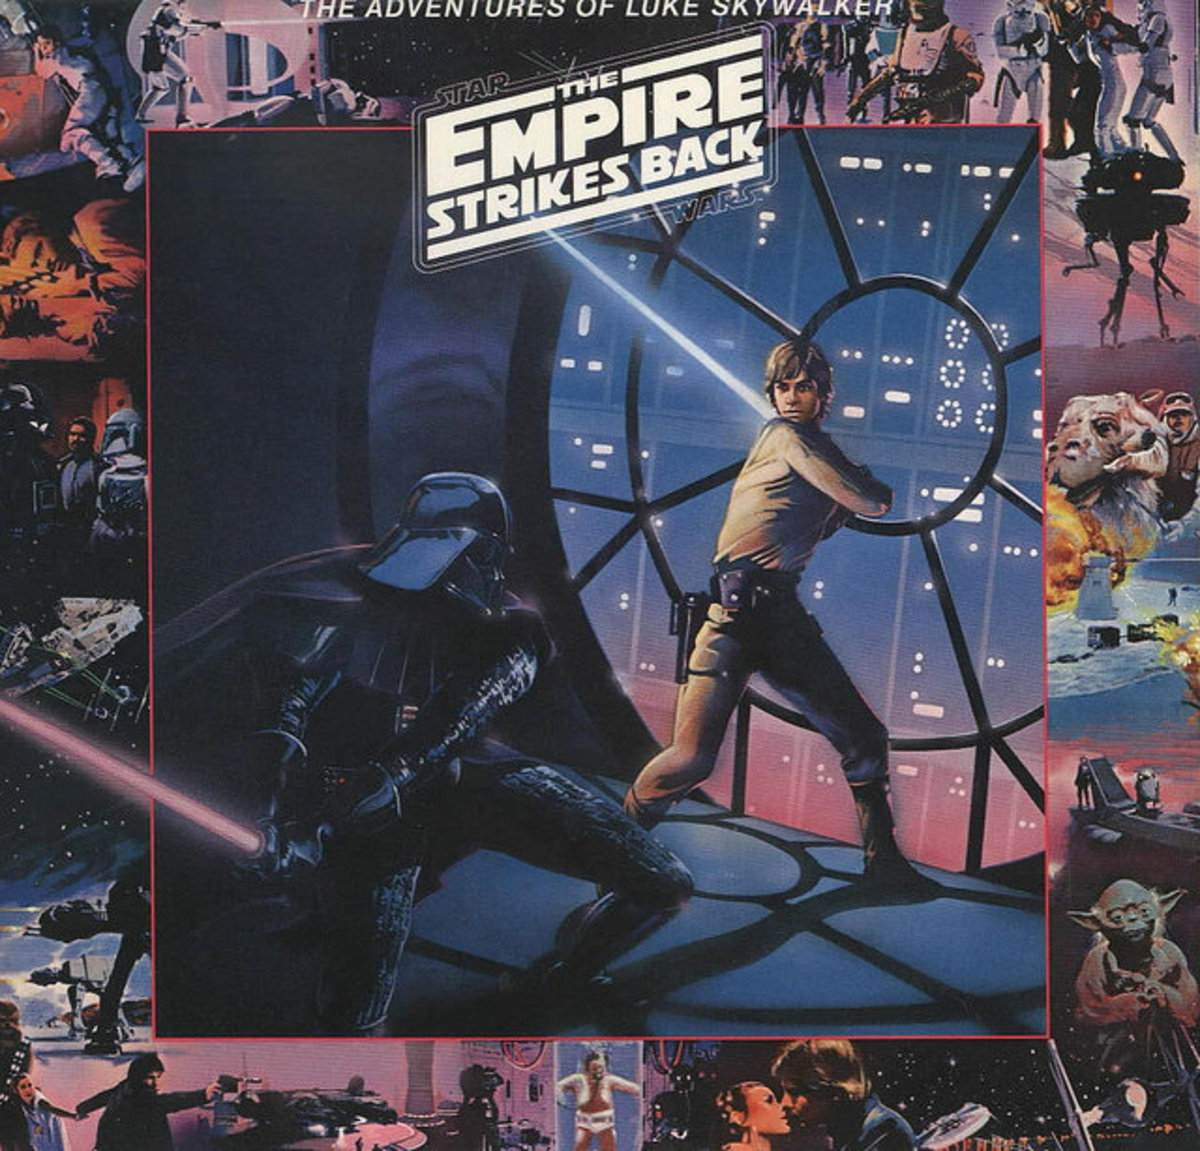 Star Wars "Empire Strikes Back" The Adventures of Luke Skywalker RSO Records RS-1-3081 12" LP Vinyl Record, US Pressing (1980) 